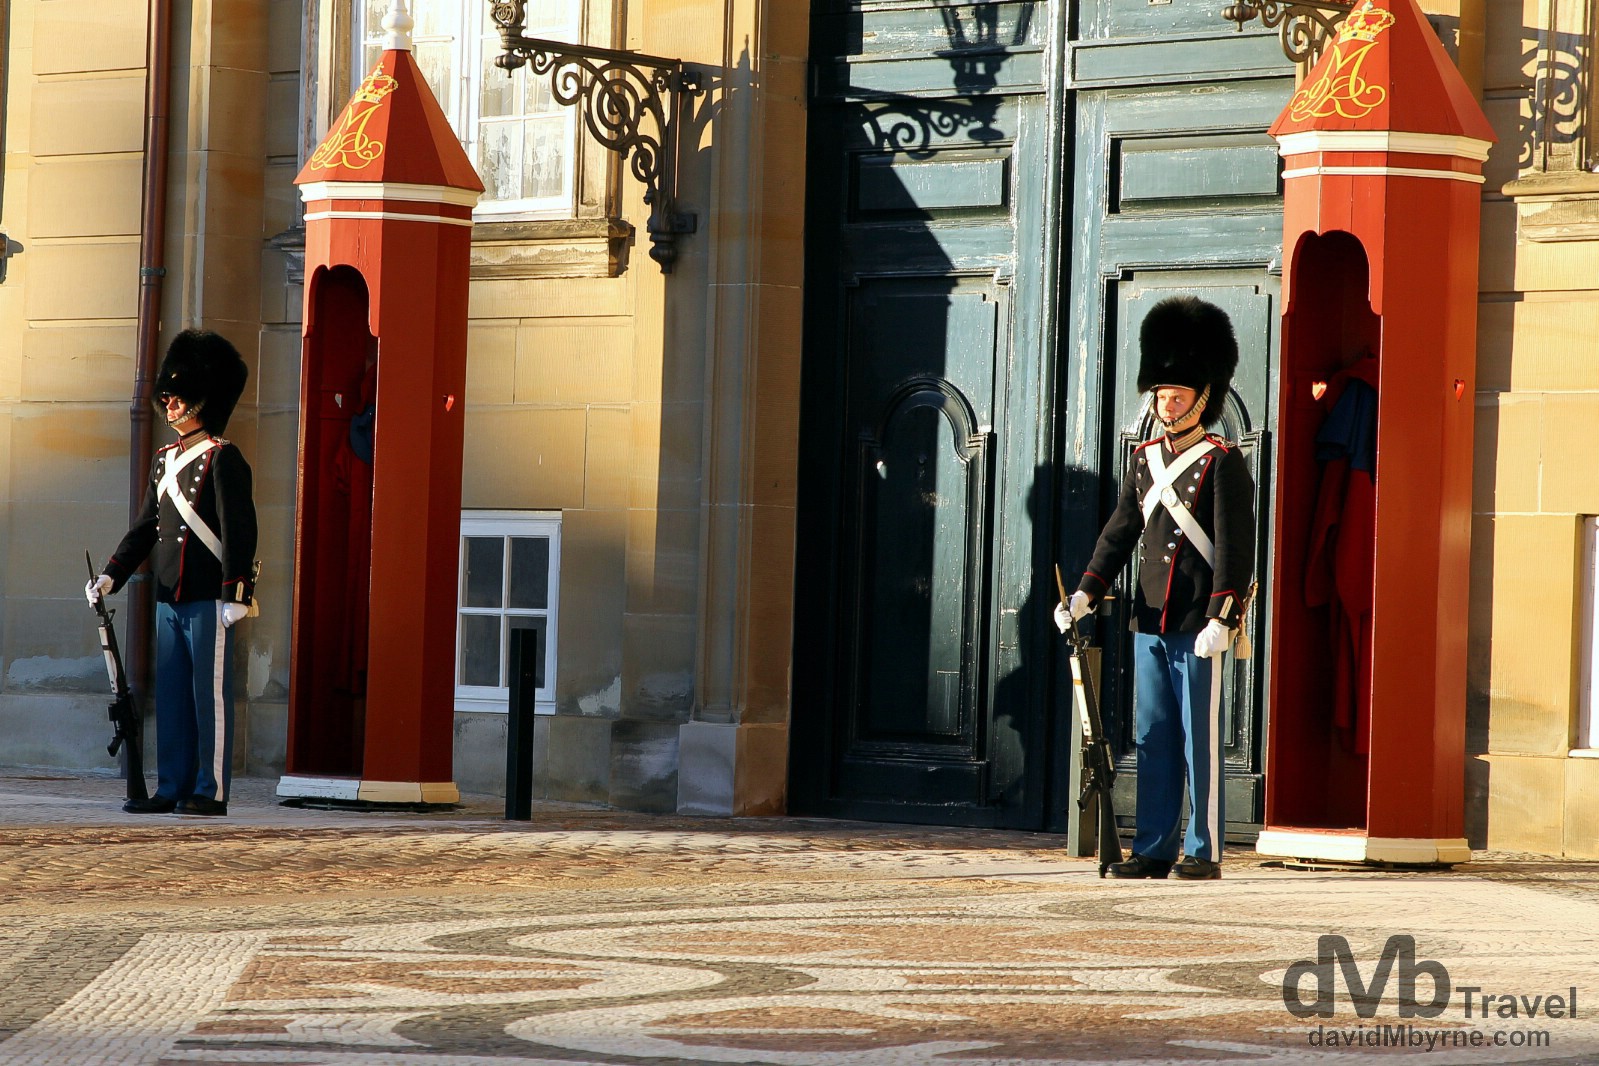 Guards outside Amalienborg, the winter residence of the Danish Royal family, in Copenhagen, Denmark. March 12th, 2014.